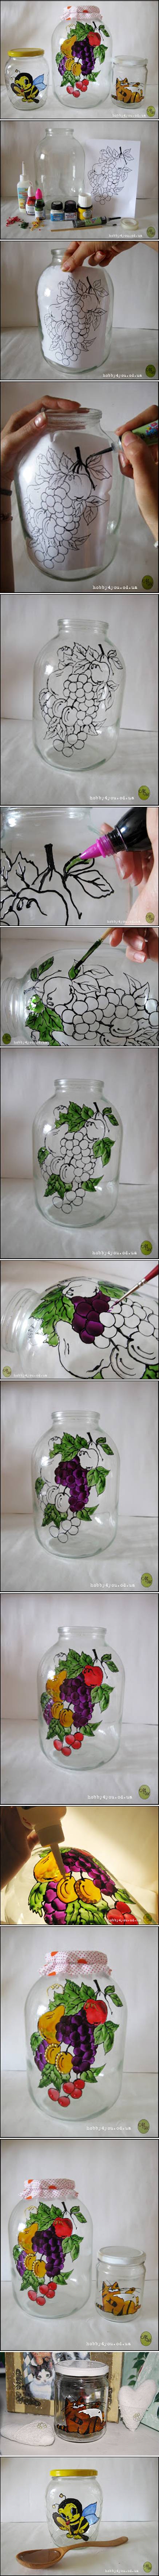 DIY-Jar-Painting-Decor